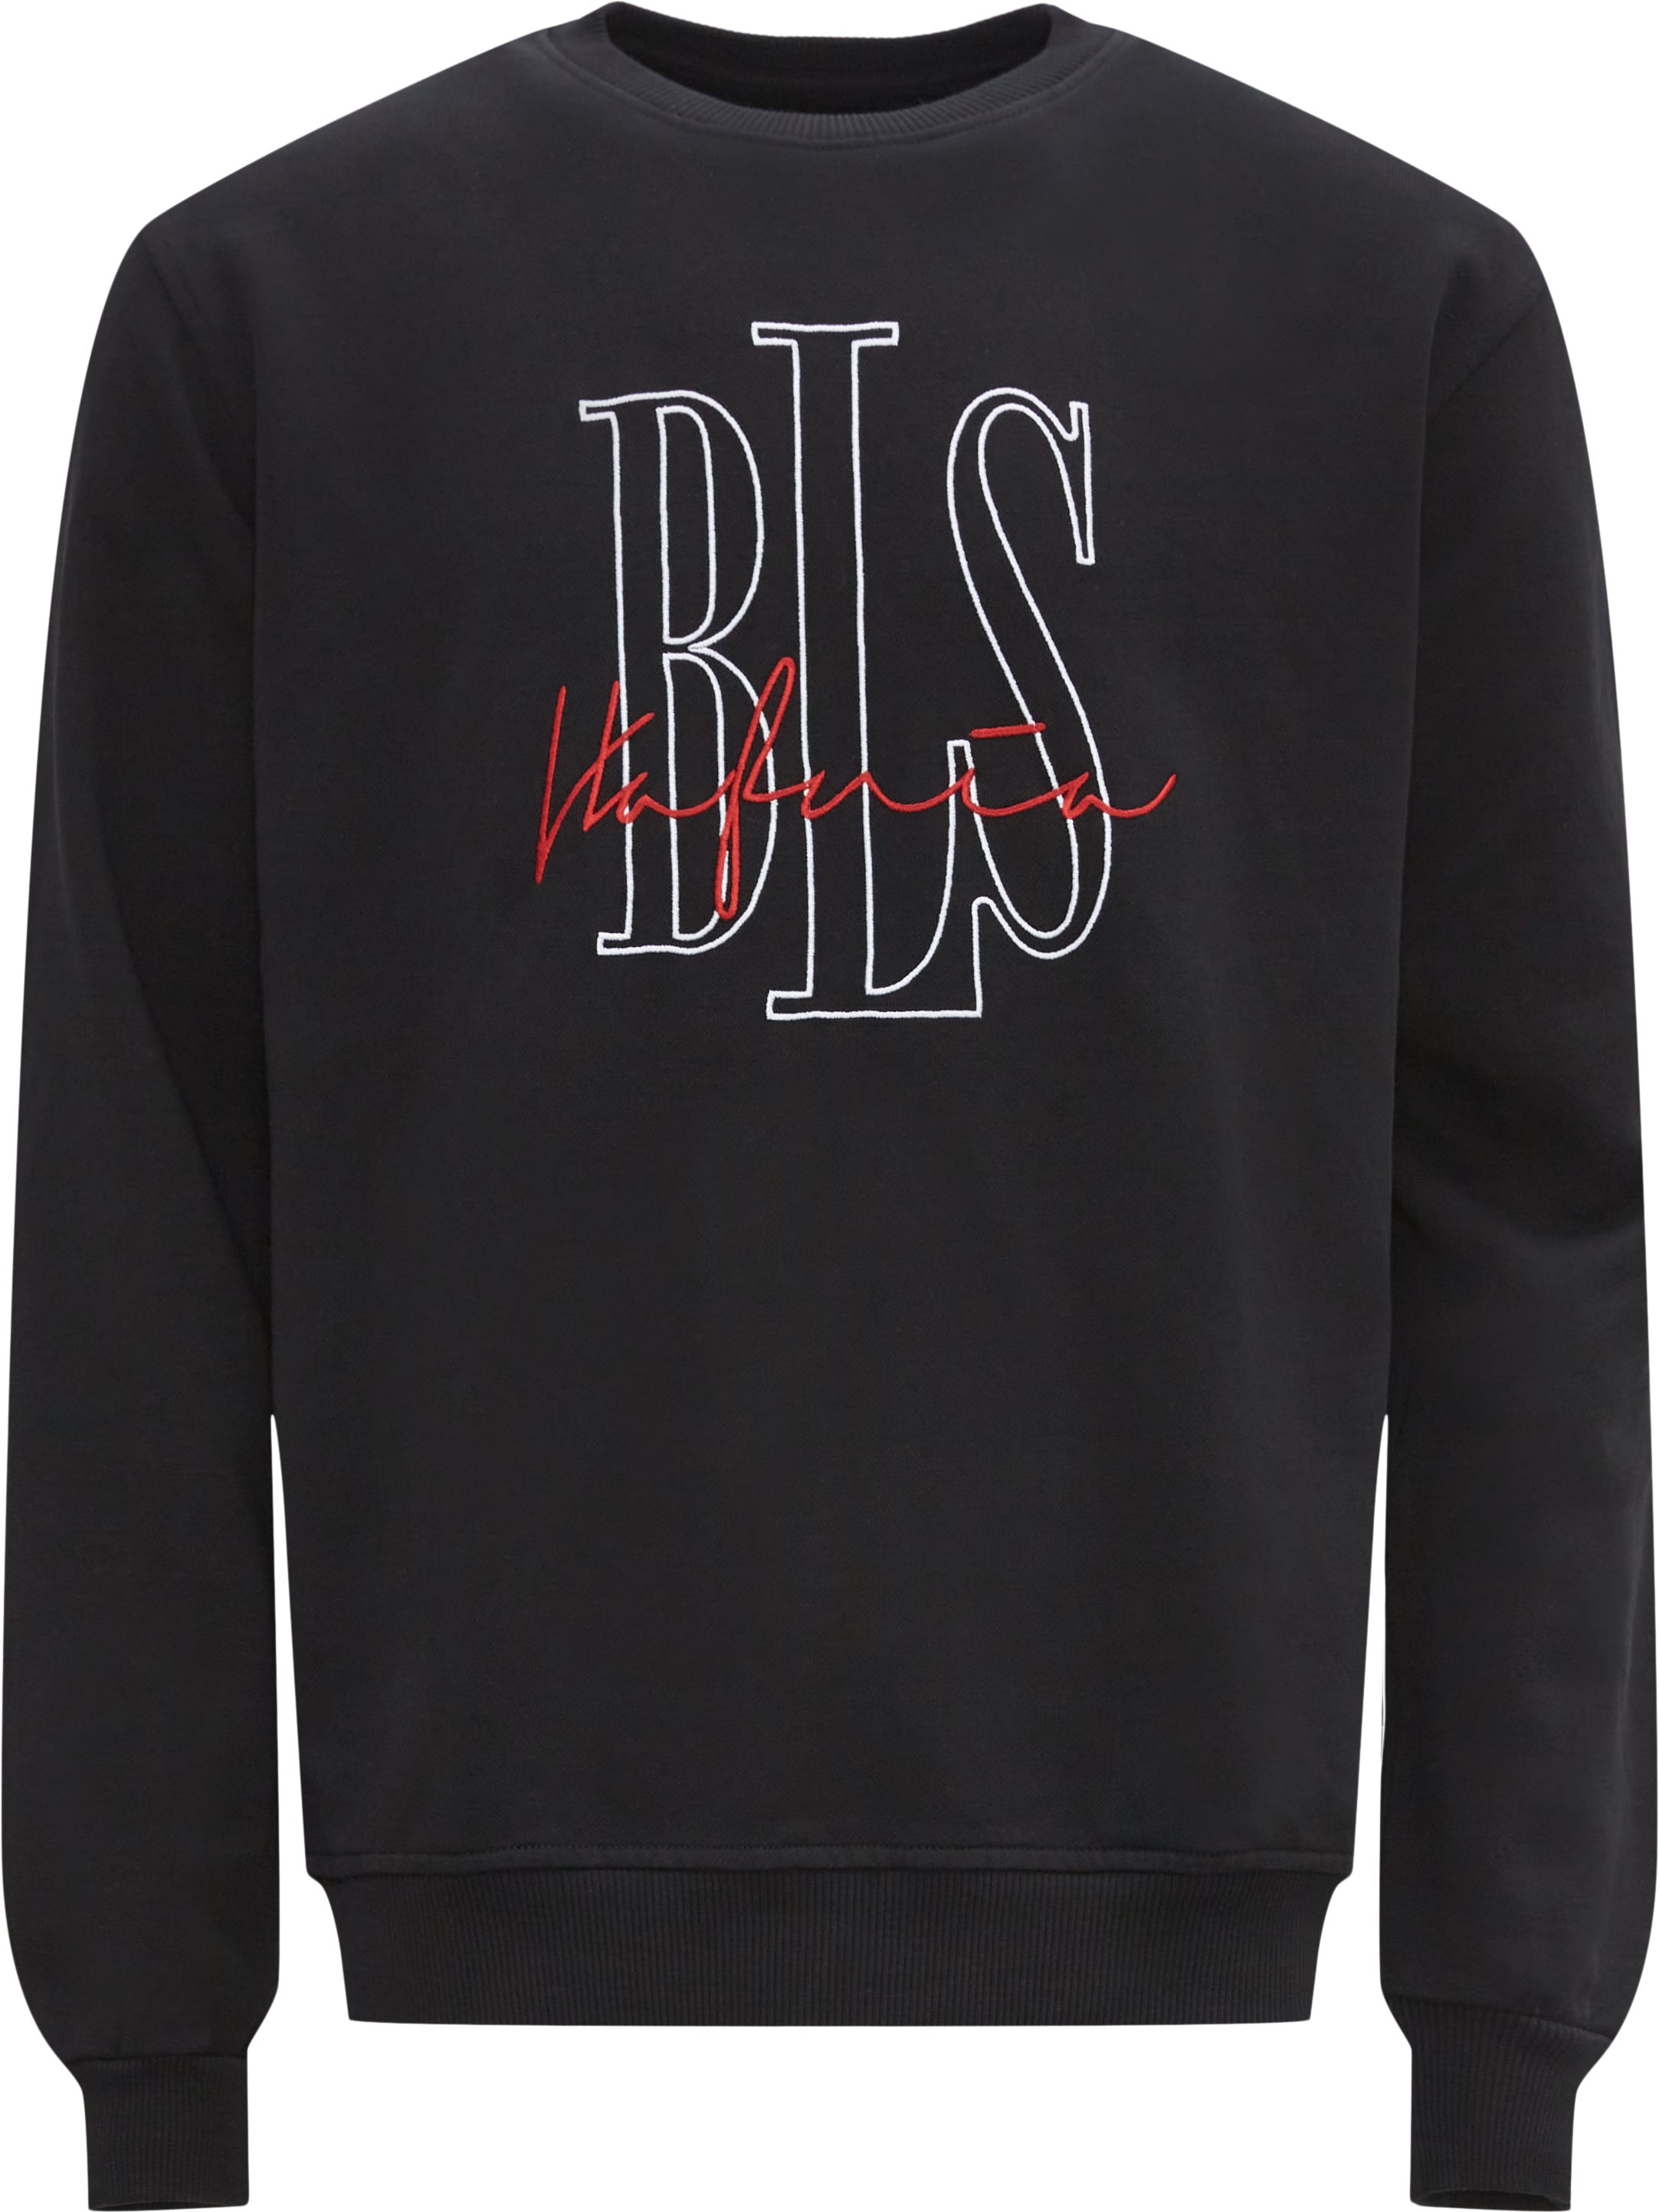 BLS Sweatshirts OUTLINE LOGO-2 CREWNECK Sort